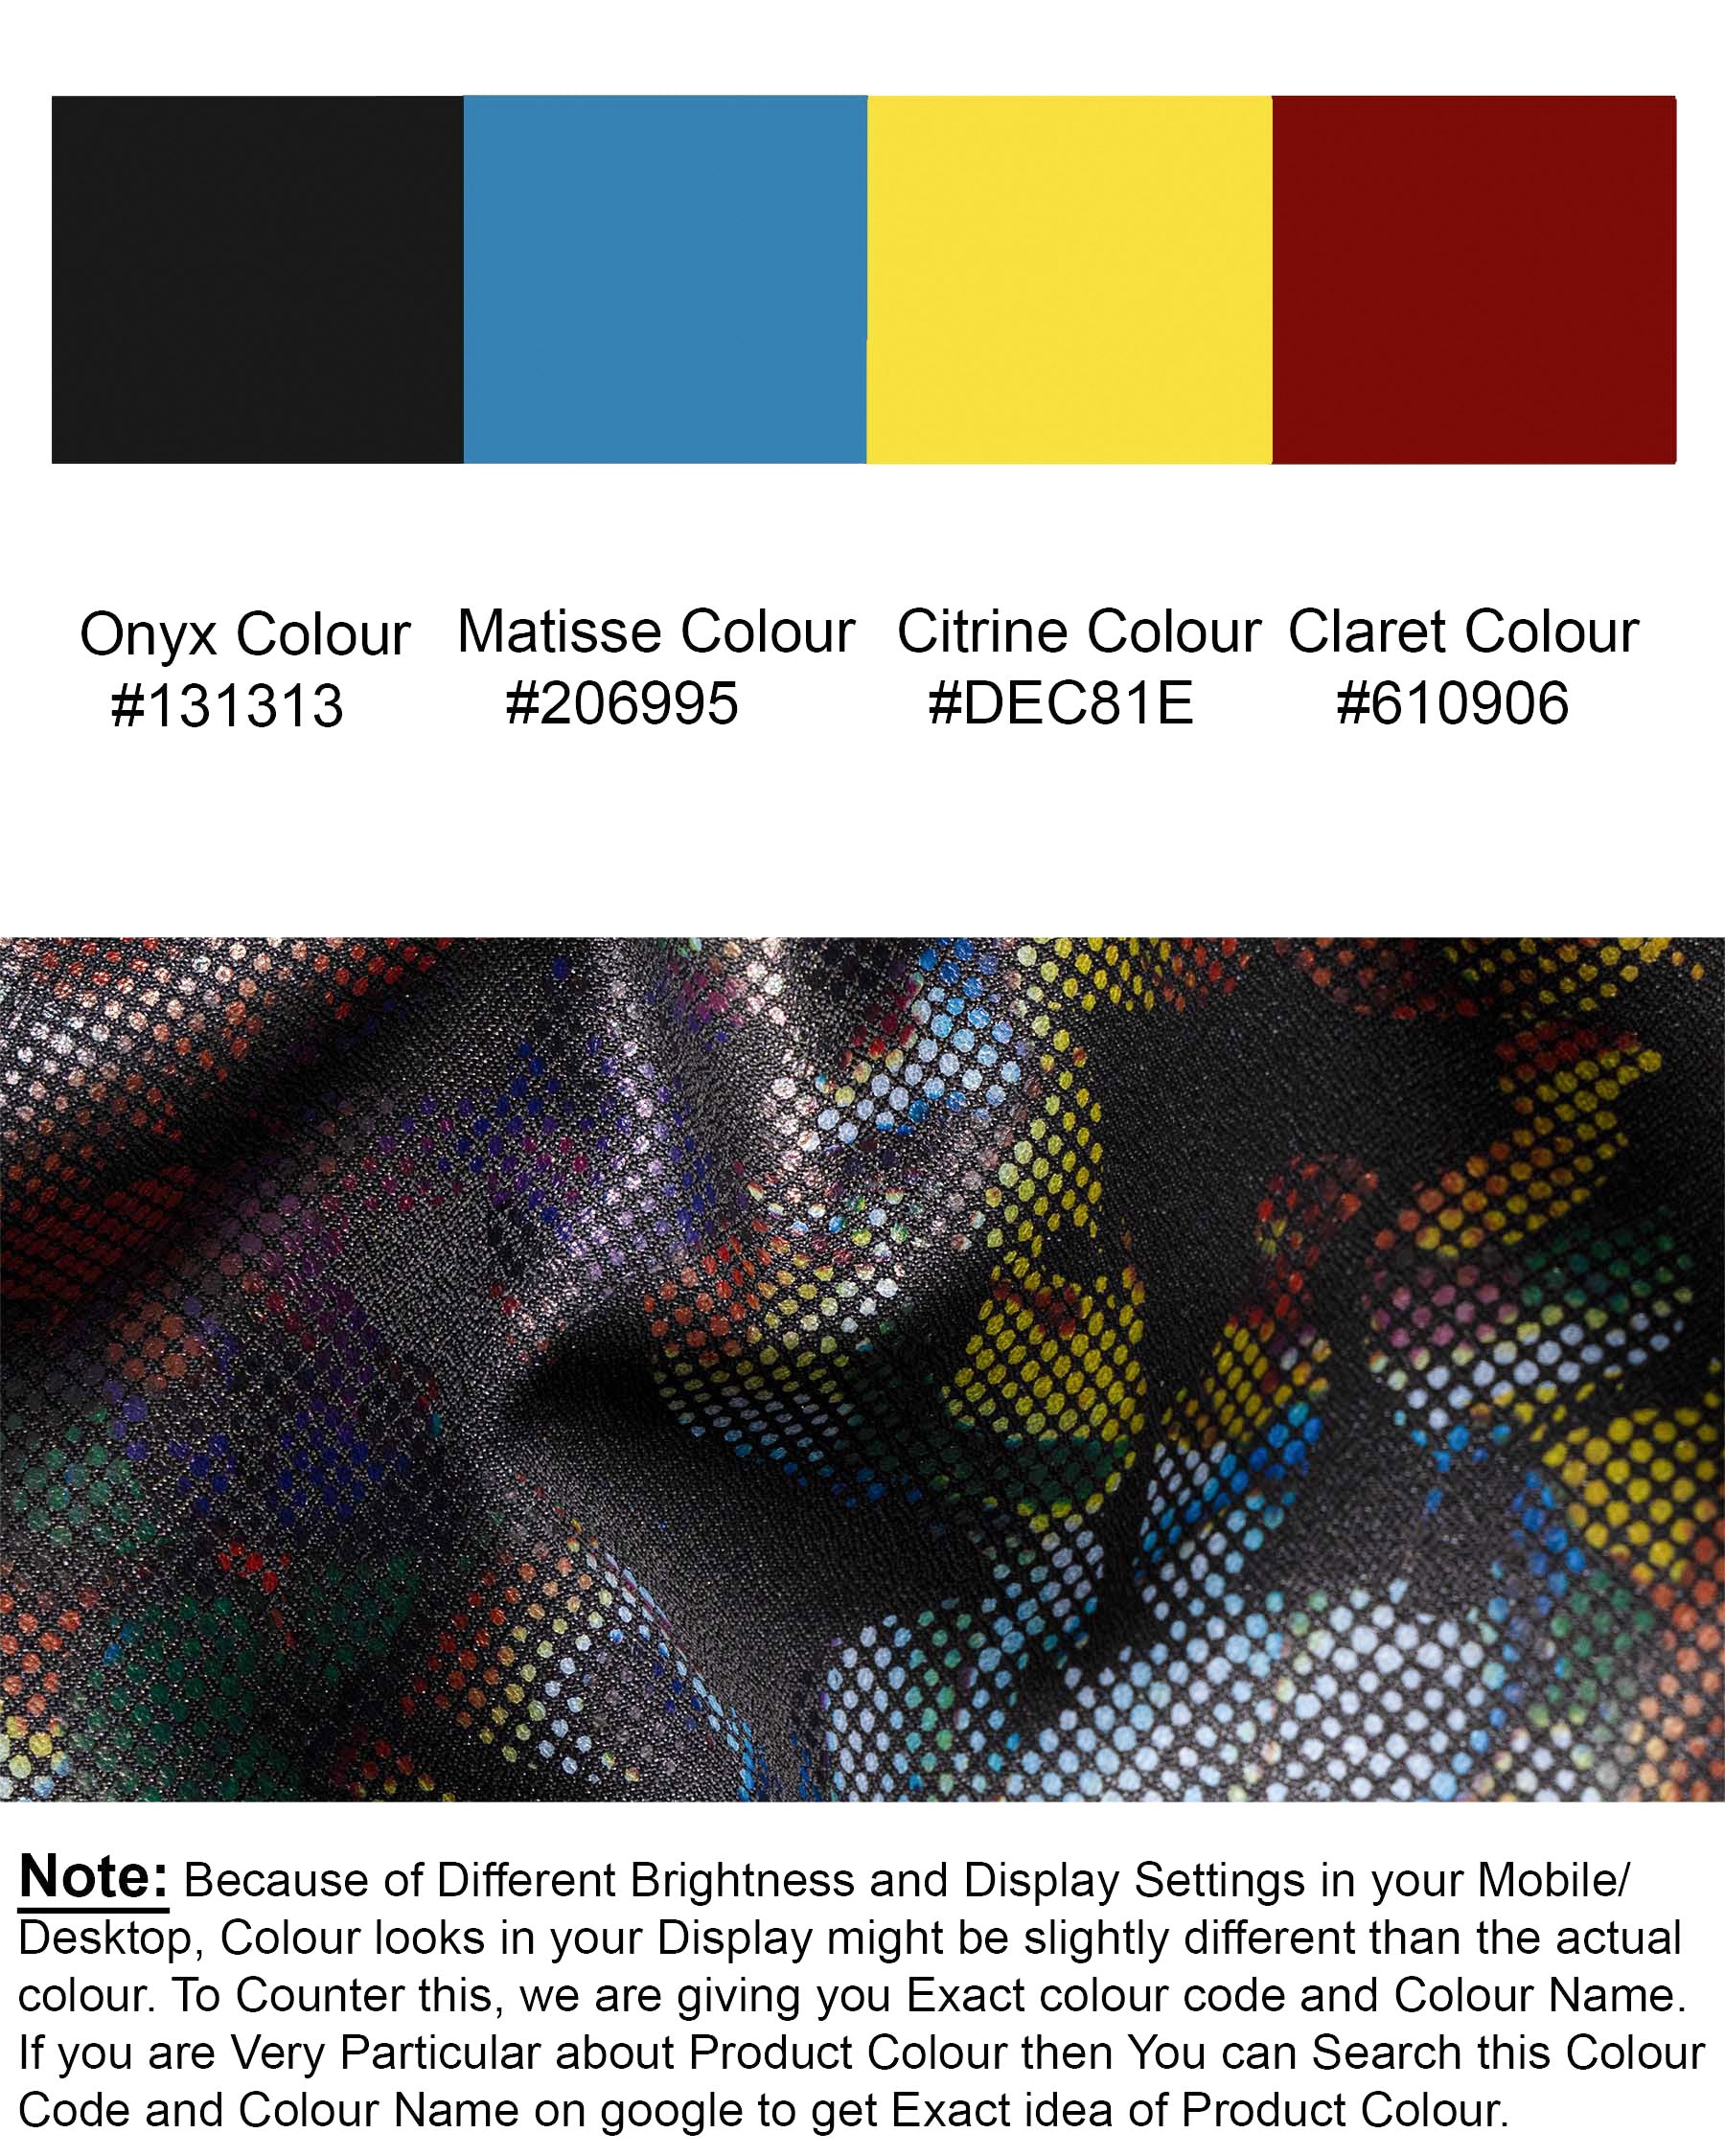 Onyx Black With Multicolour Retro Floral Designer Tuxedo Blazer BL1807-BKL-36,BL1807-BKL-38,BL1807-BKL-40,BL1807-BKL2-42,BL1807-BKL-44,BL1807-BKL-46,BL1807-BKL-48,BL1807-BKL-50,BL1807-BKL-52,BL1807-BKL-54,BL1807-BKL-56,BL1807-BKL-58,BL1807-BKL-60